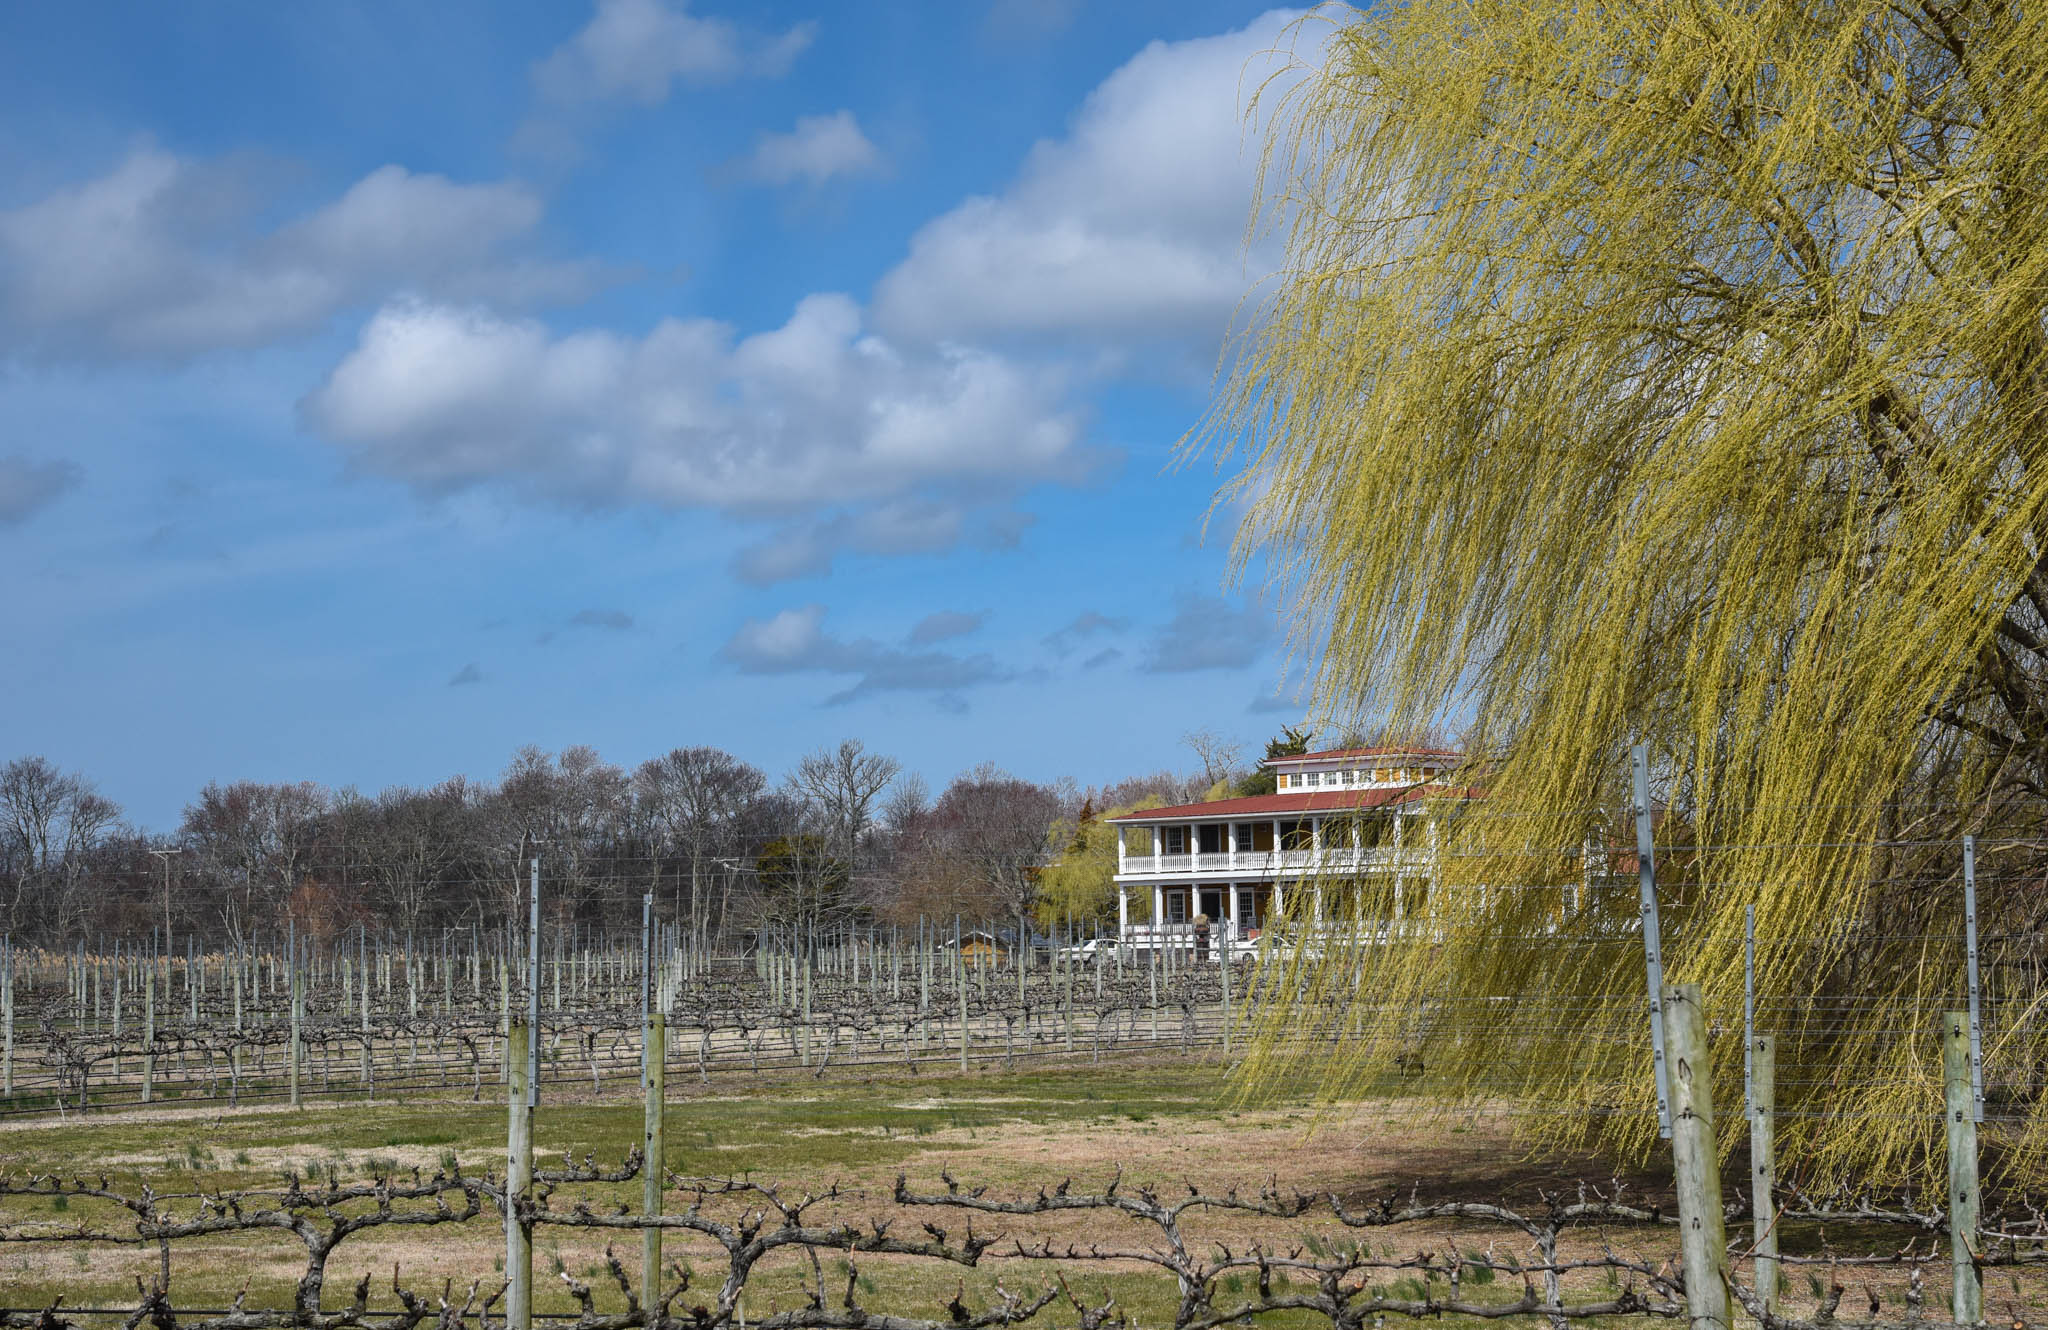 Willow Creek Winery